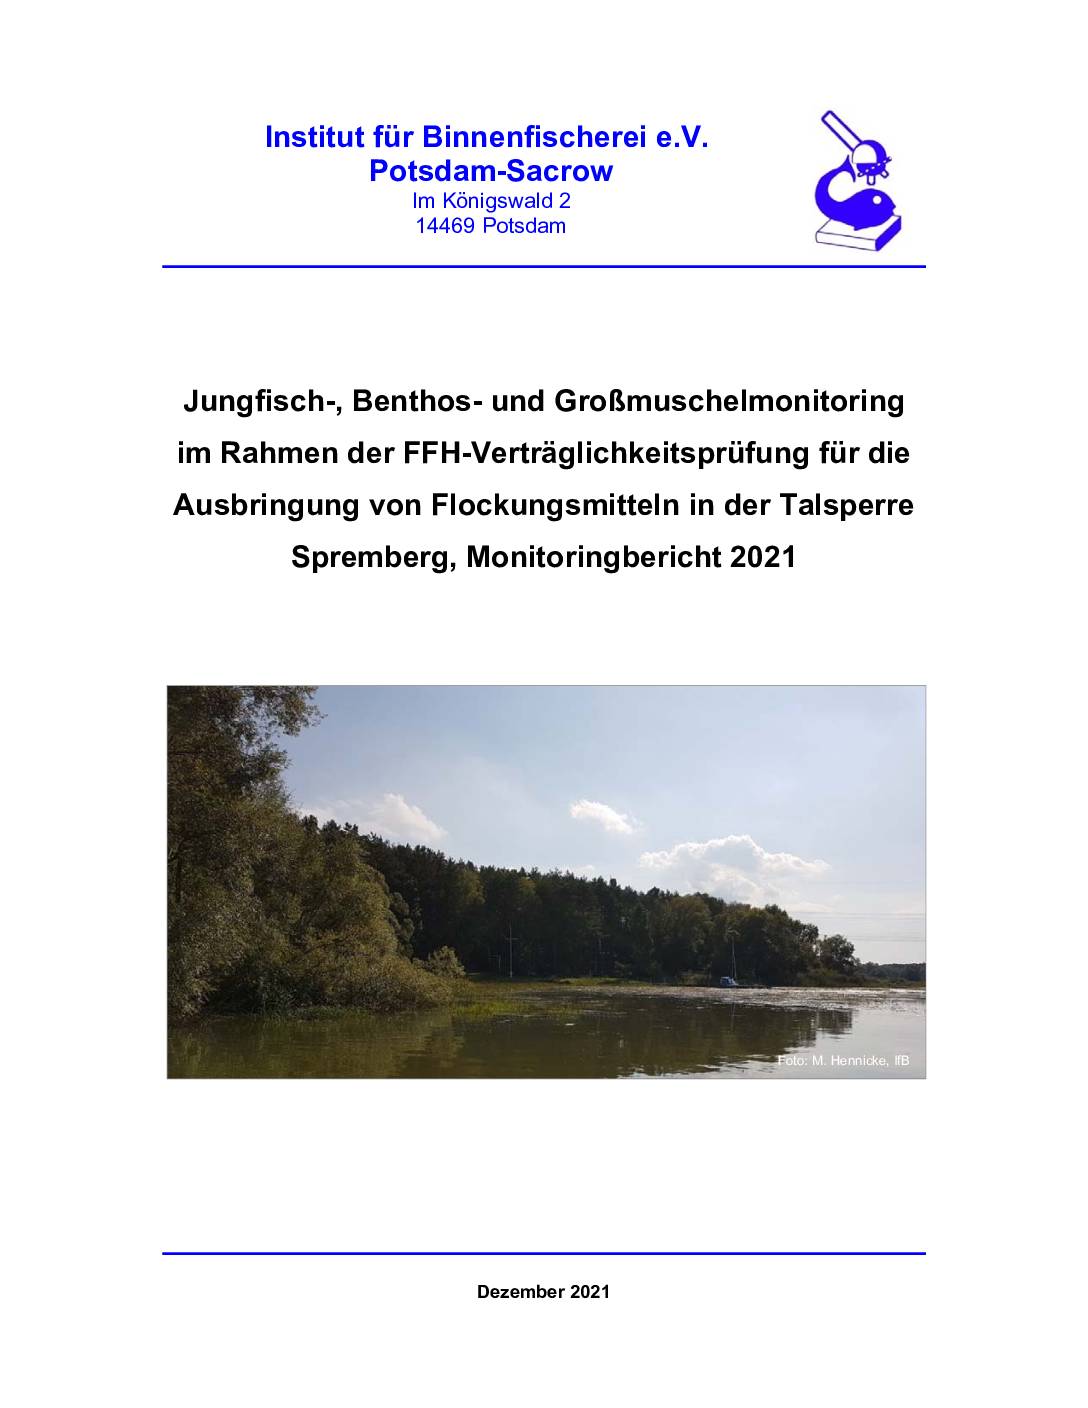 Monitoringbericht 2021 Talsperre Spremberg pdf